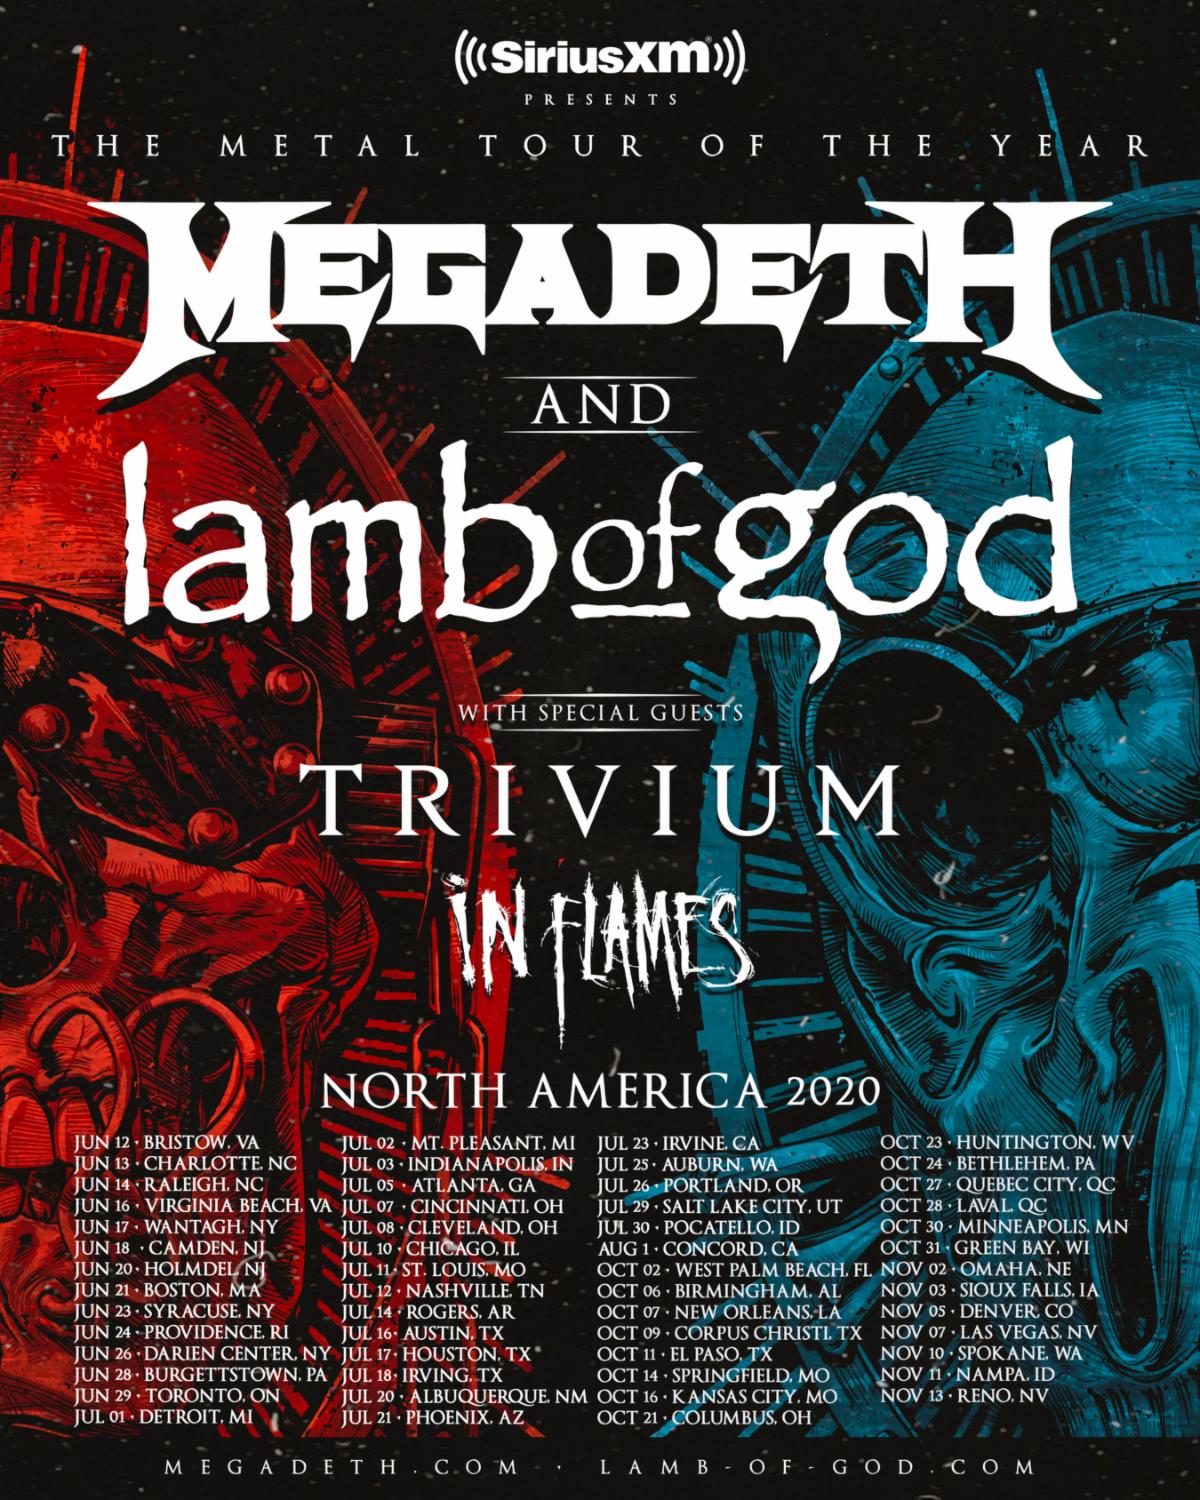 MEGADETH AND LAMB OF GOD ANNOUNCE MASSIVE 2020 CO-HEADLINE TOUR ACROSS NORTH AMERICA